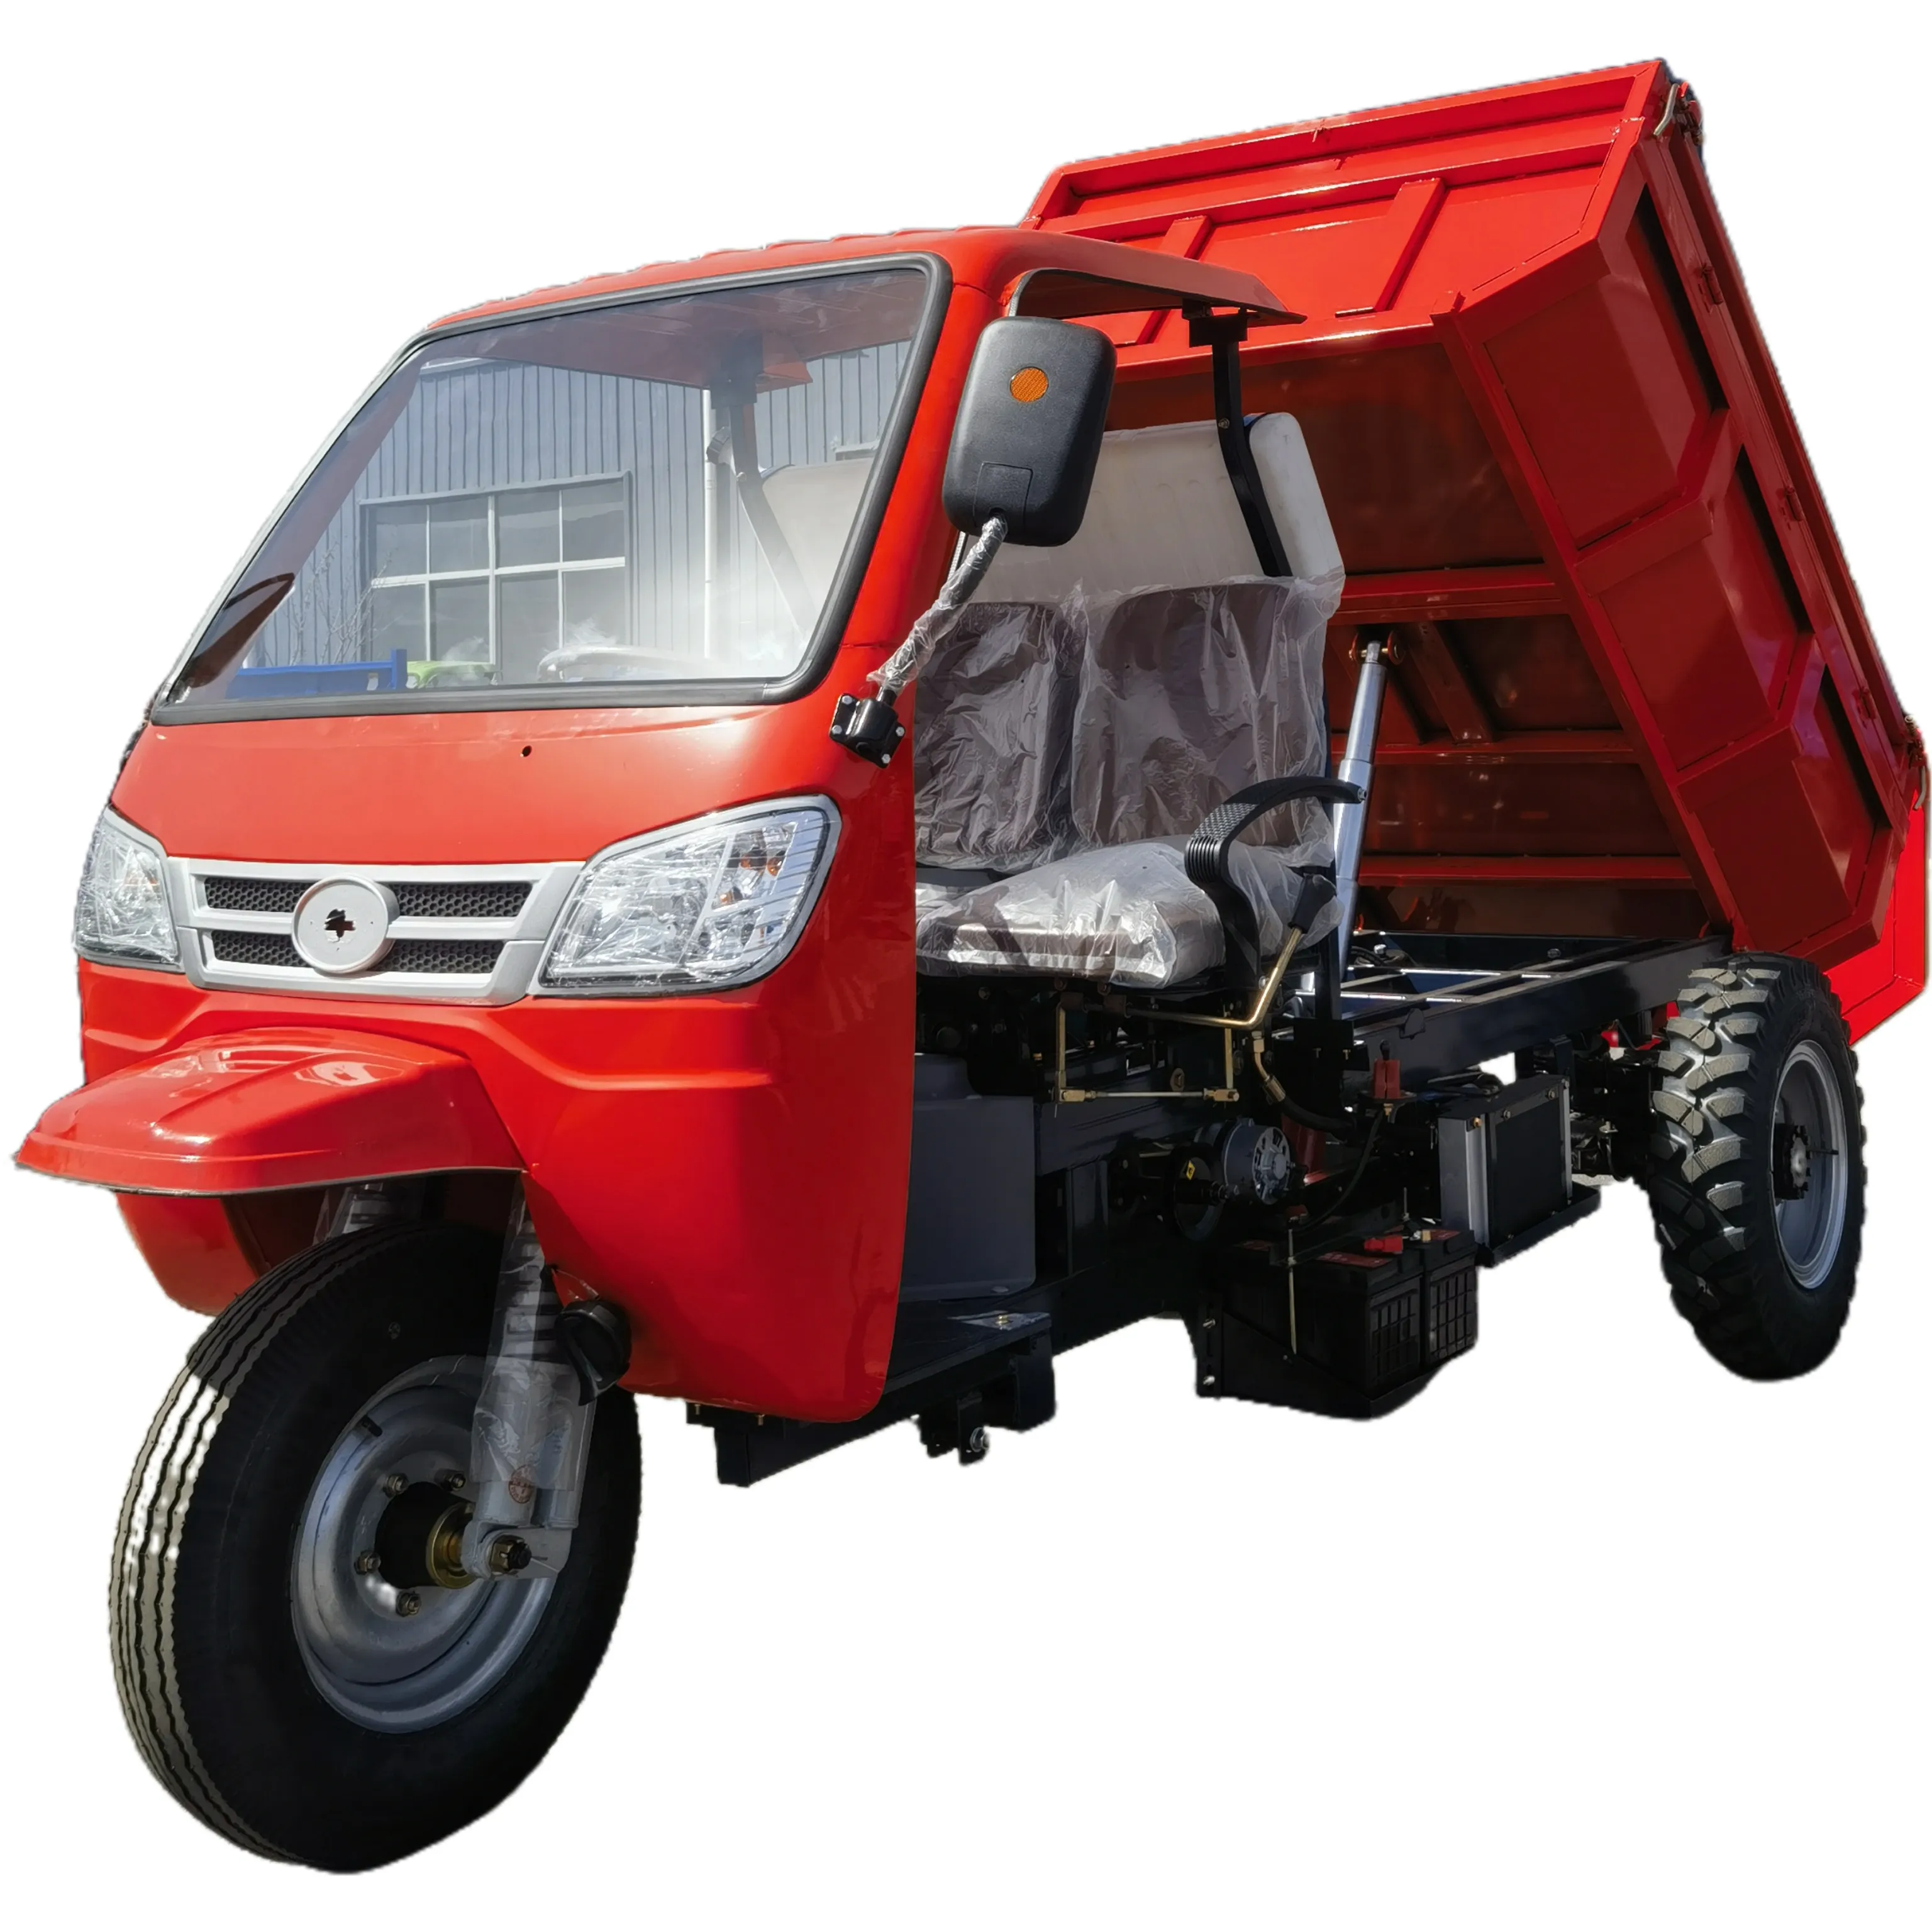 Triciclo diesel de alta qualidade para transporte eficiente de carga